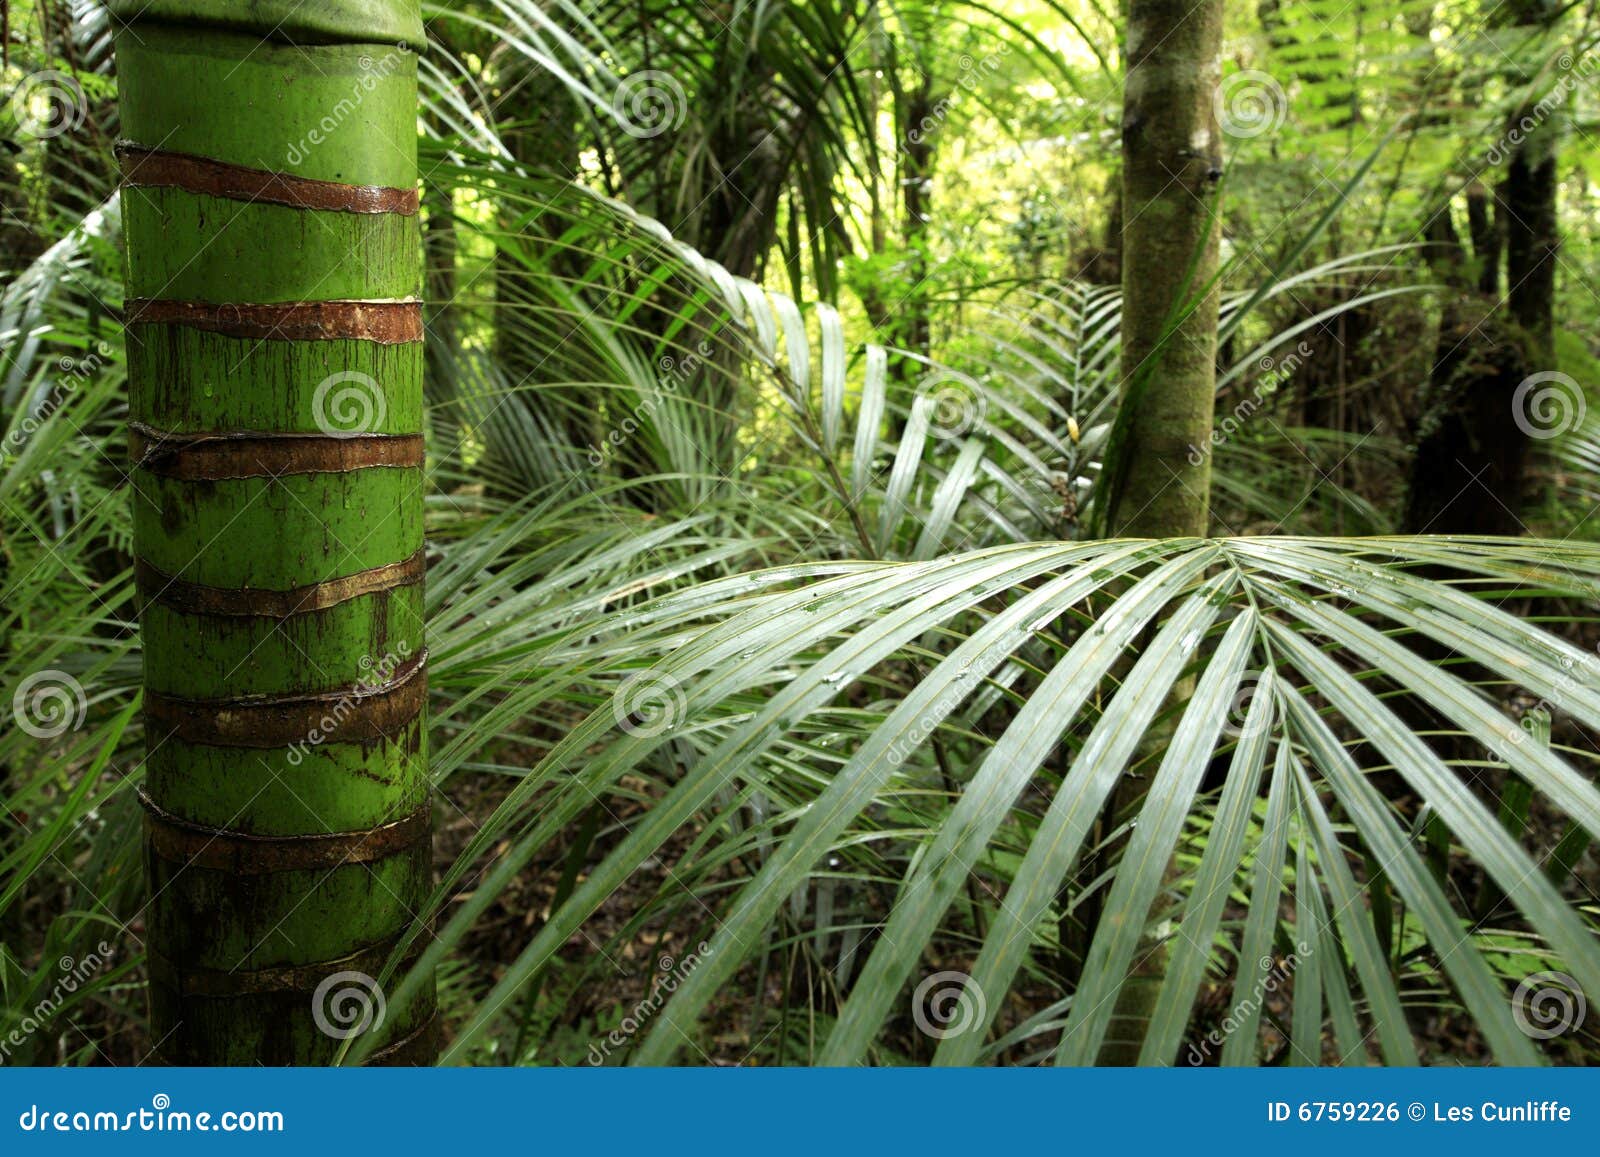 tropical jungle vegetation